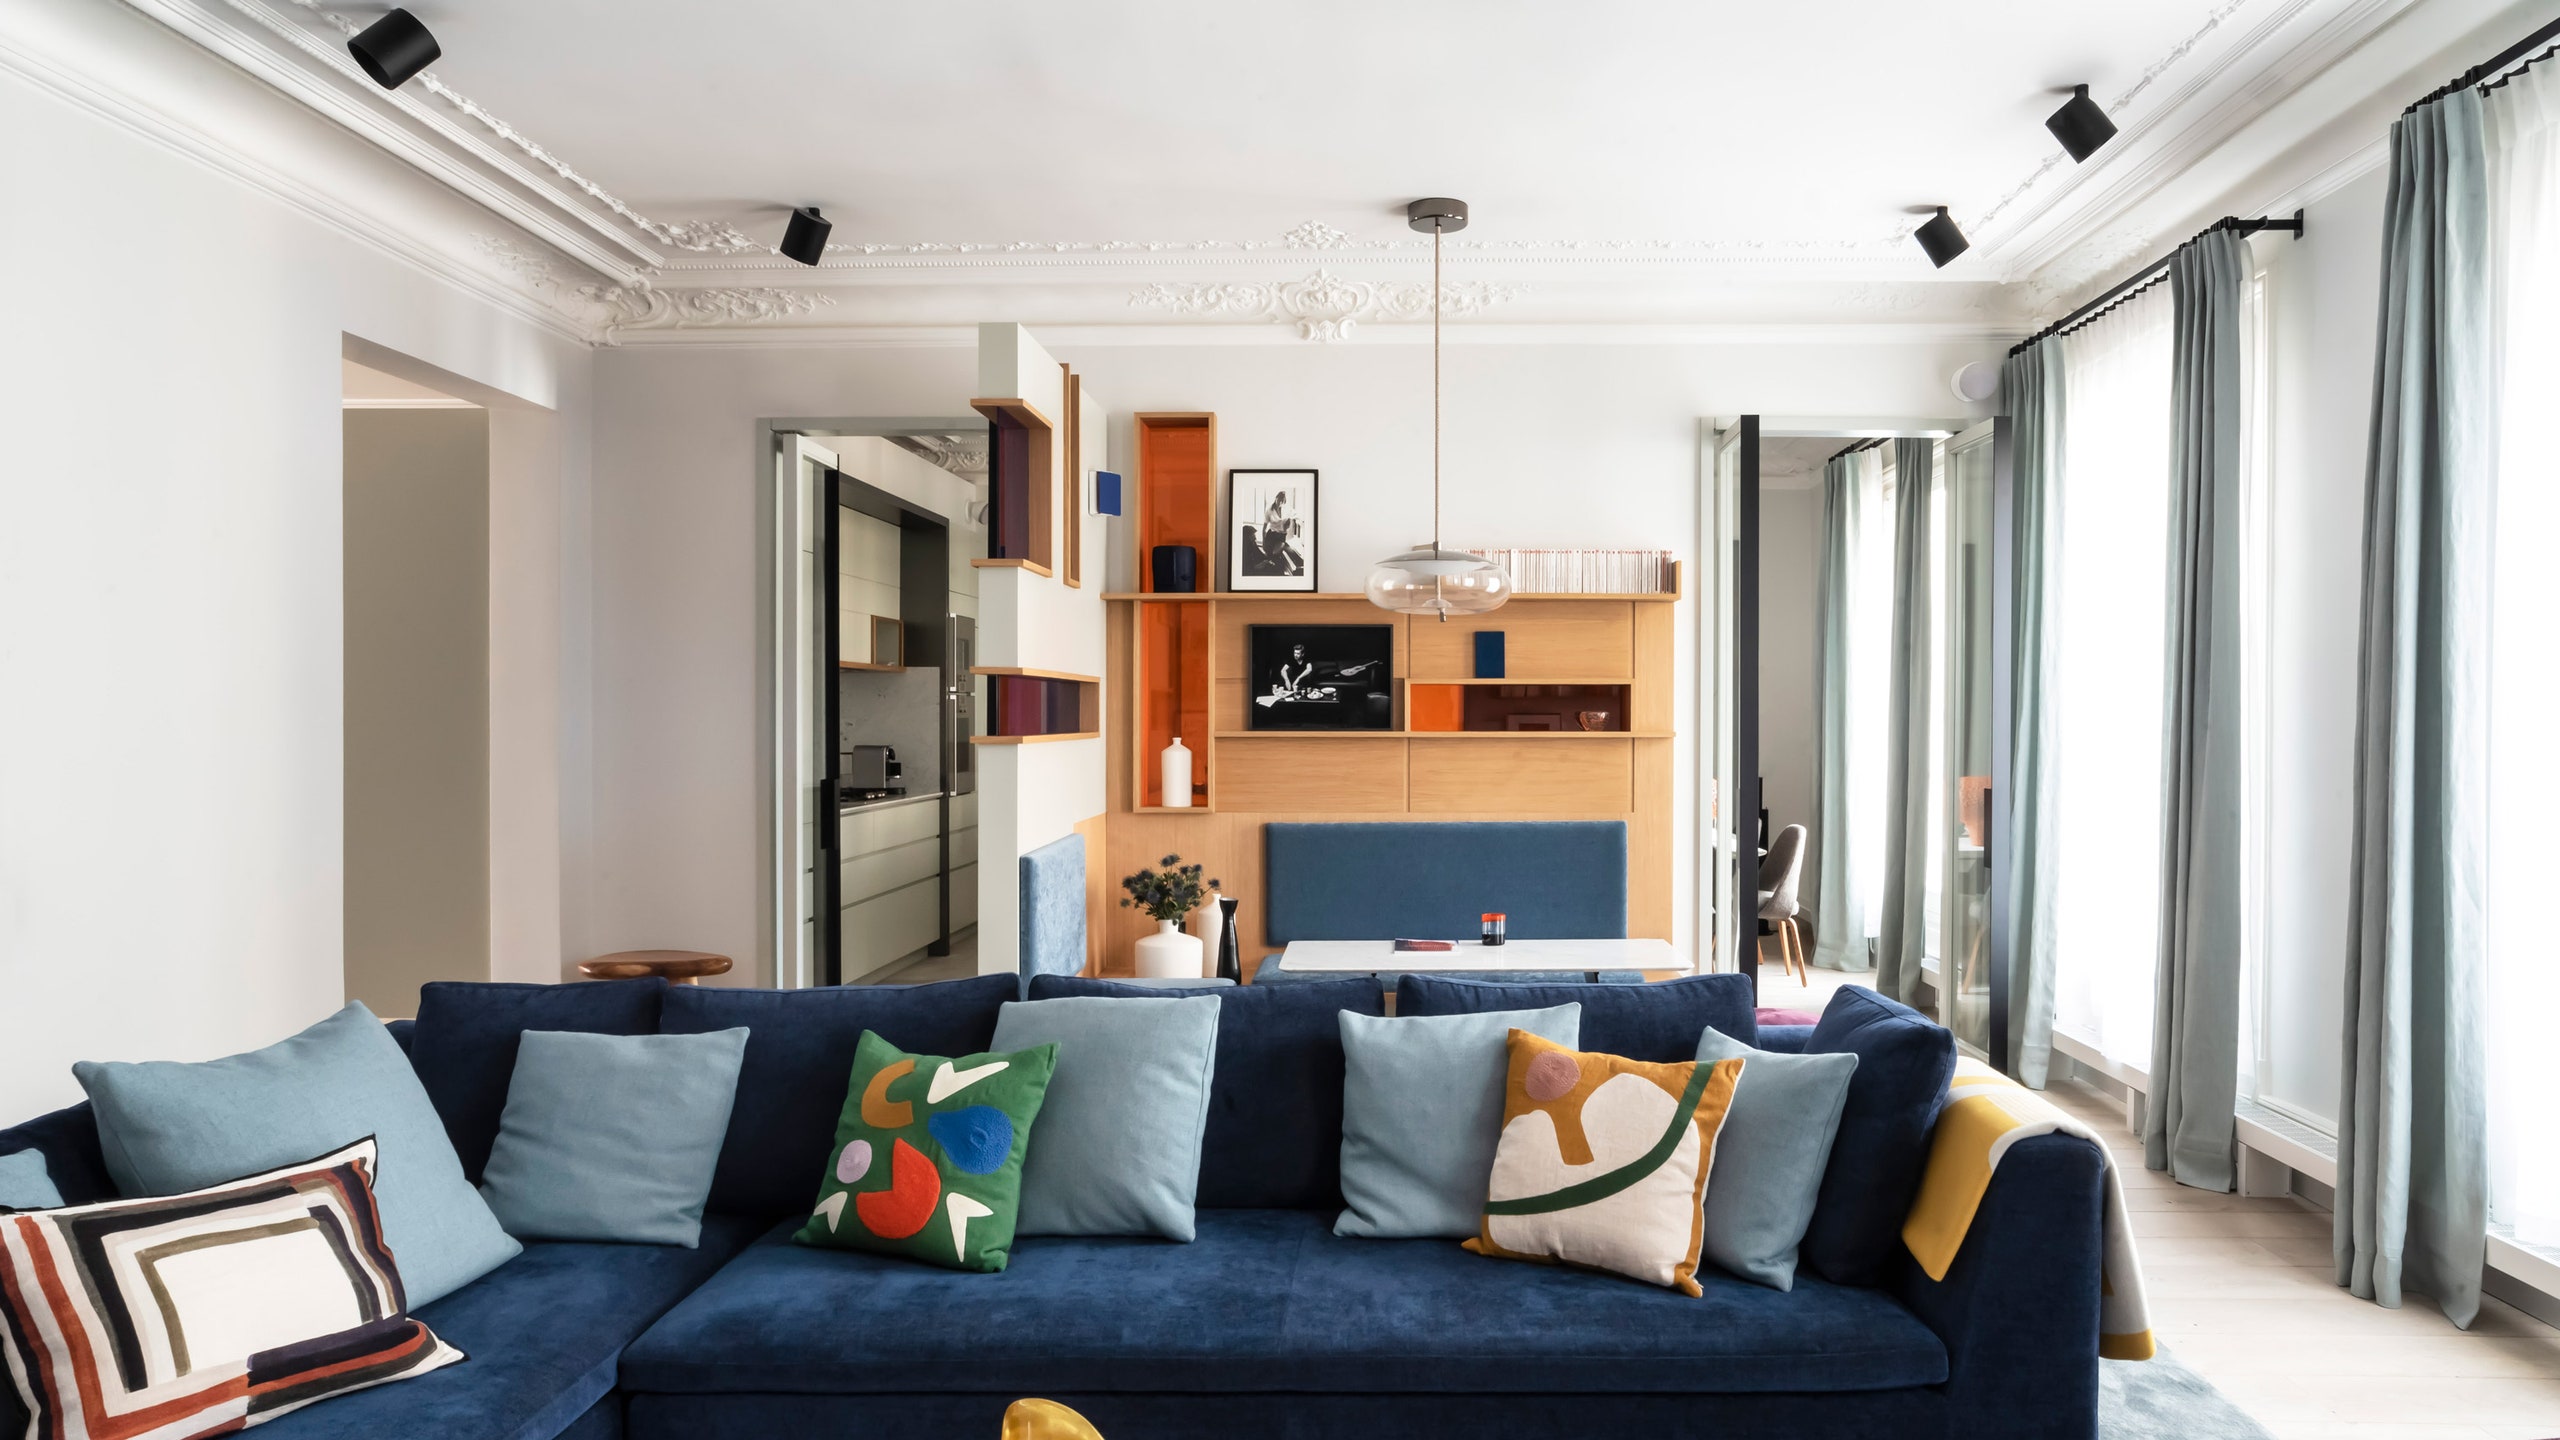 AD-home - дизайн интерьера квартиры в европе, франция , 56 кв. м